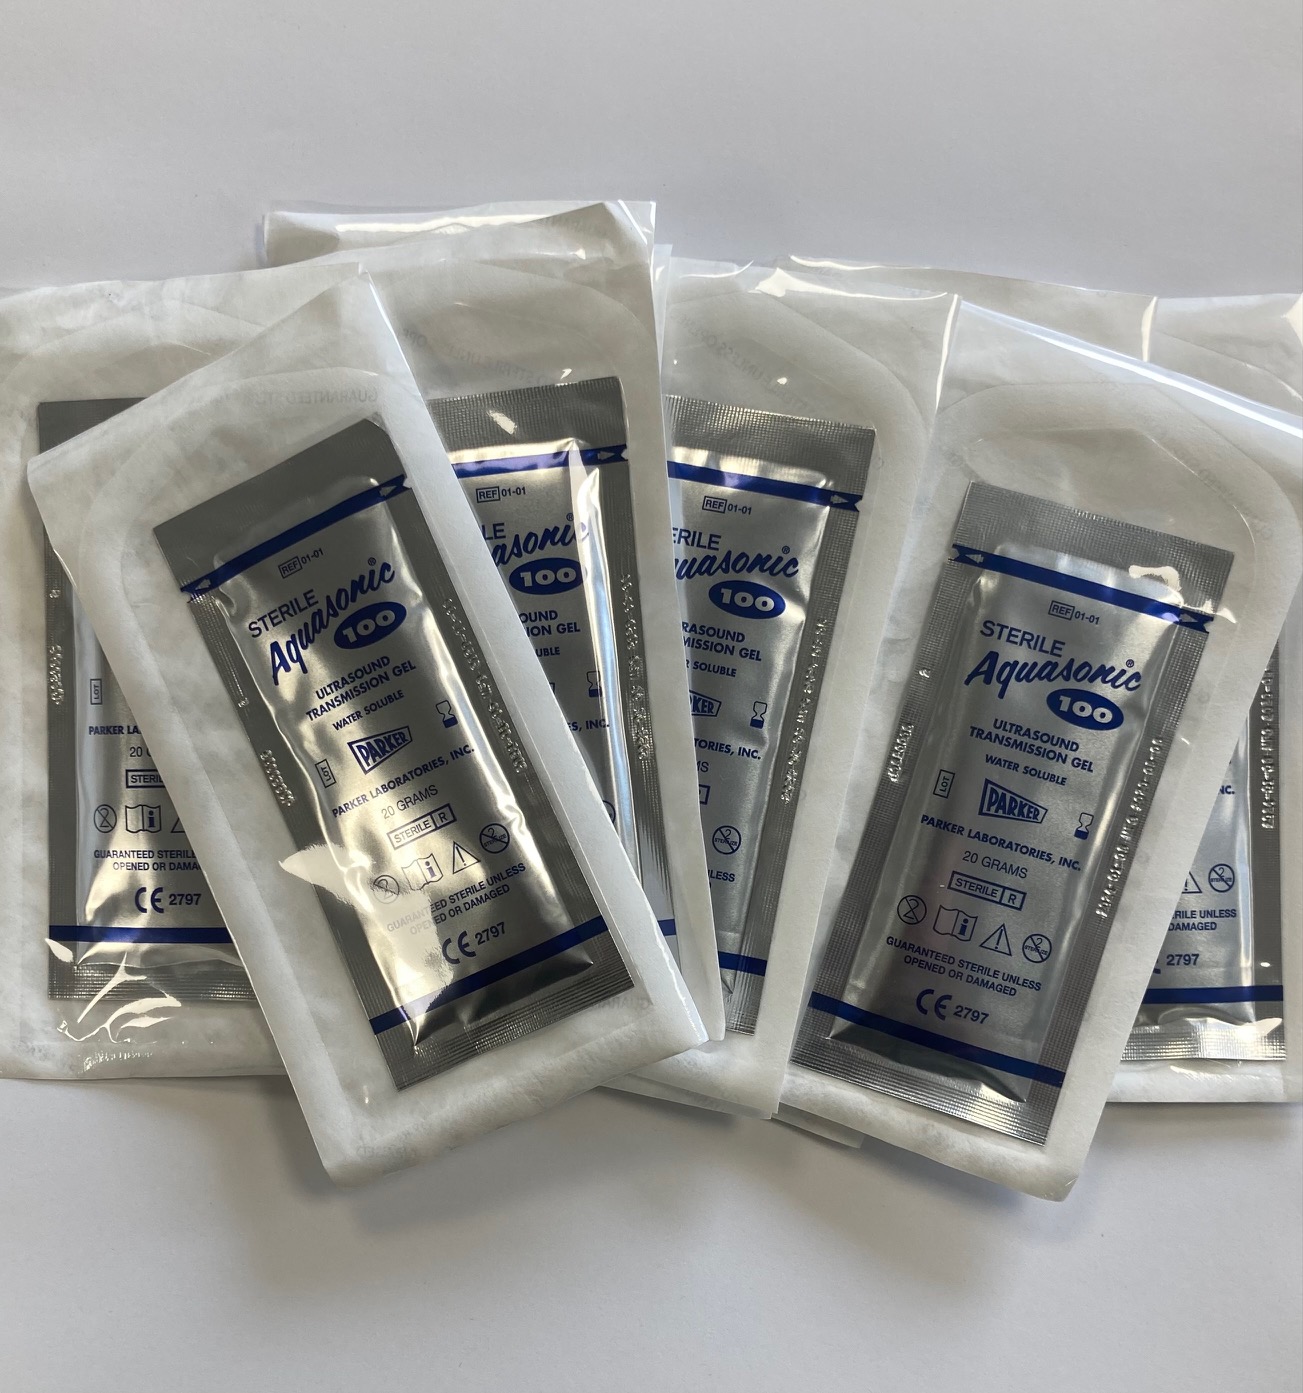 parker gel stérile aquasonic 100 sachet de 20g by tablelya